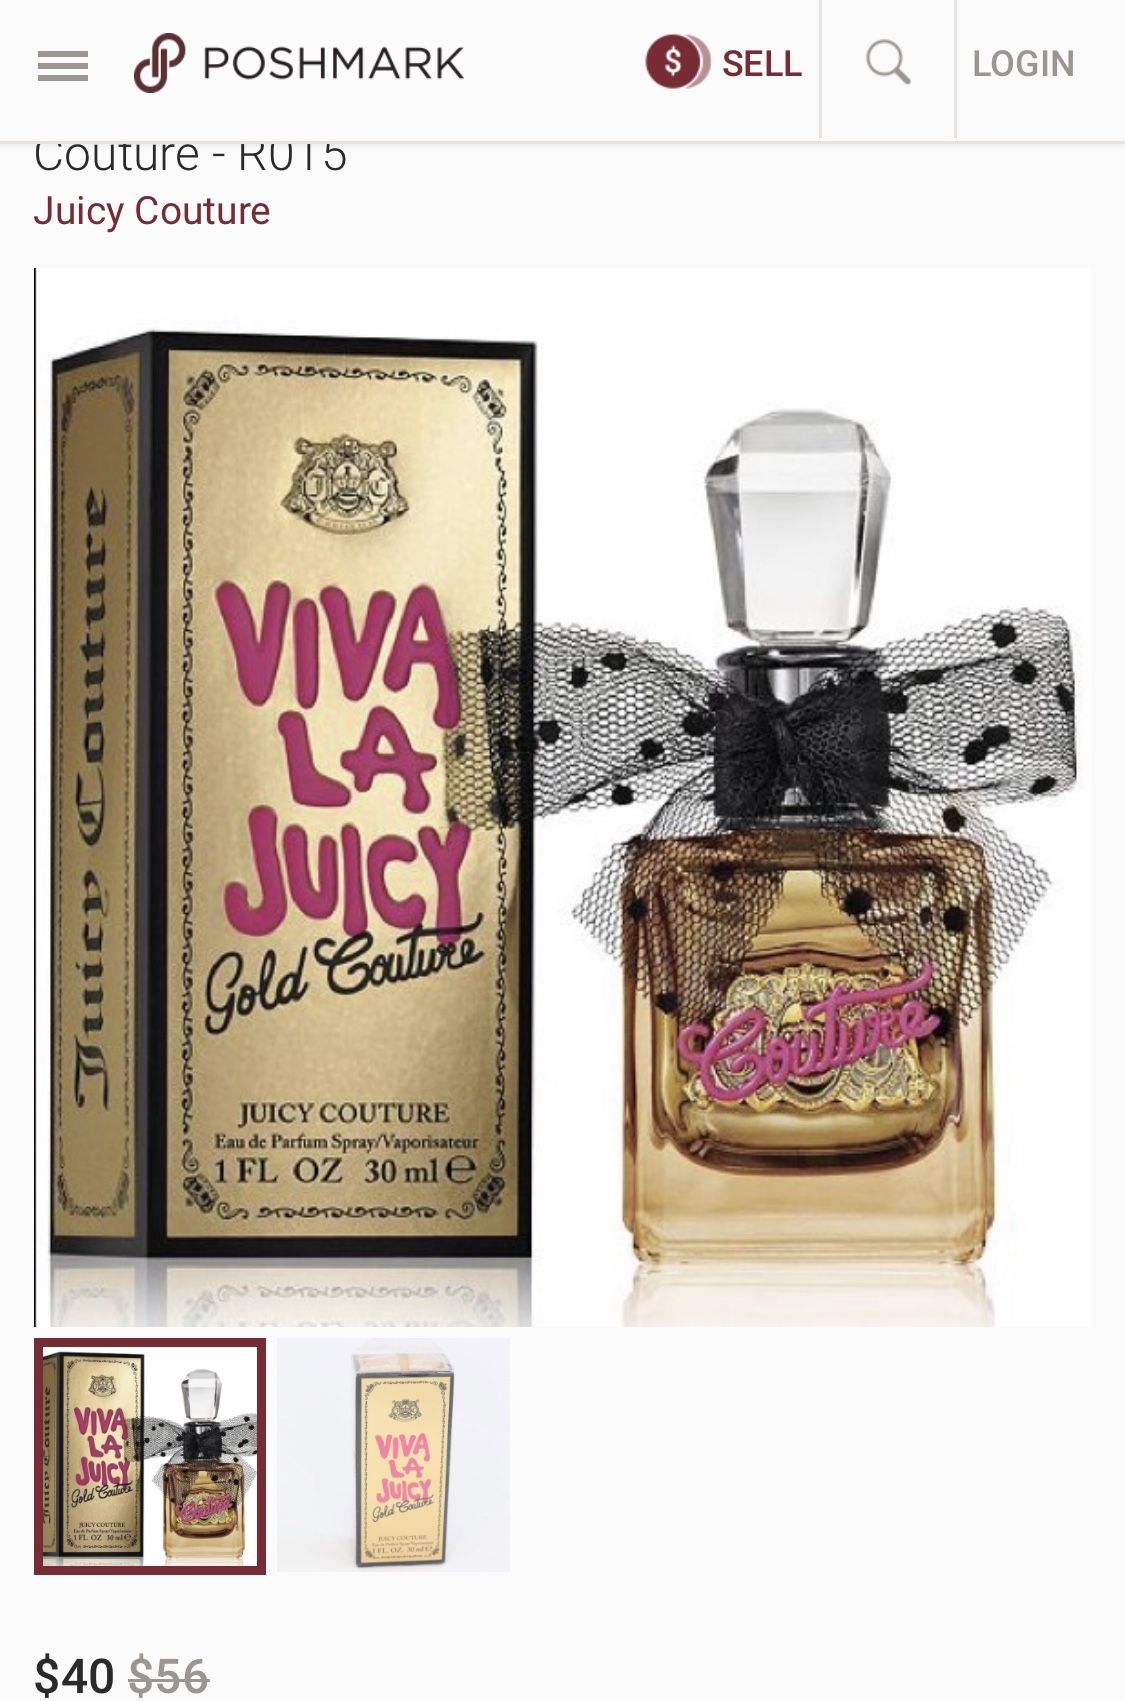 Viva La Juicy Gold Couture perfume